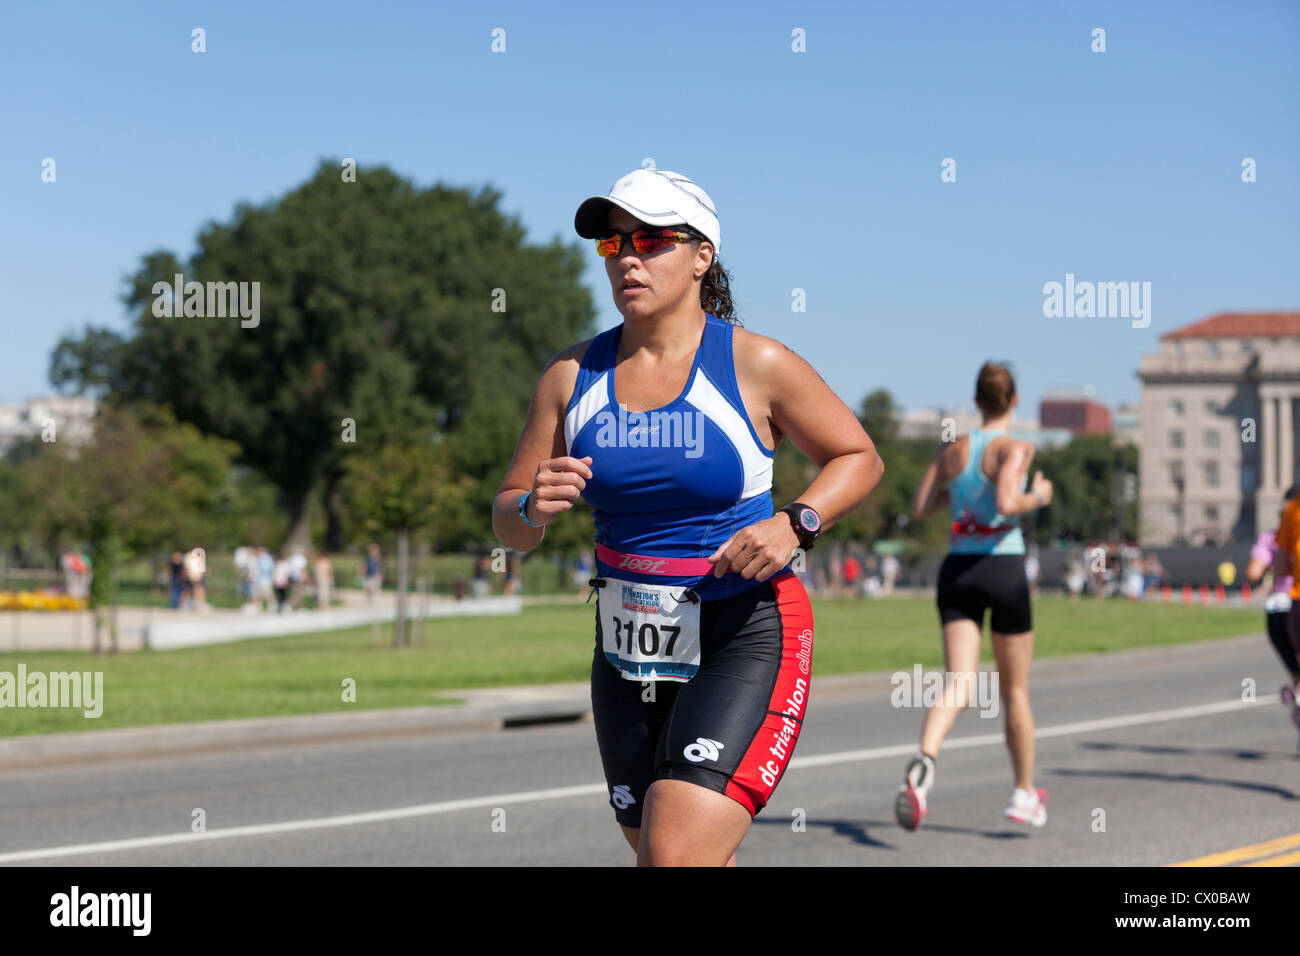 Female racer running in a marathon Stock Photo